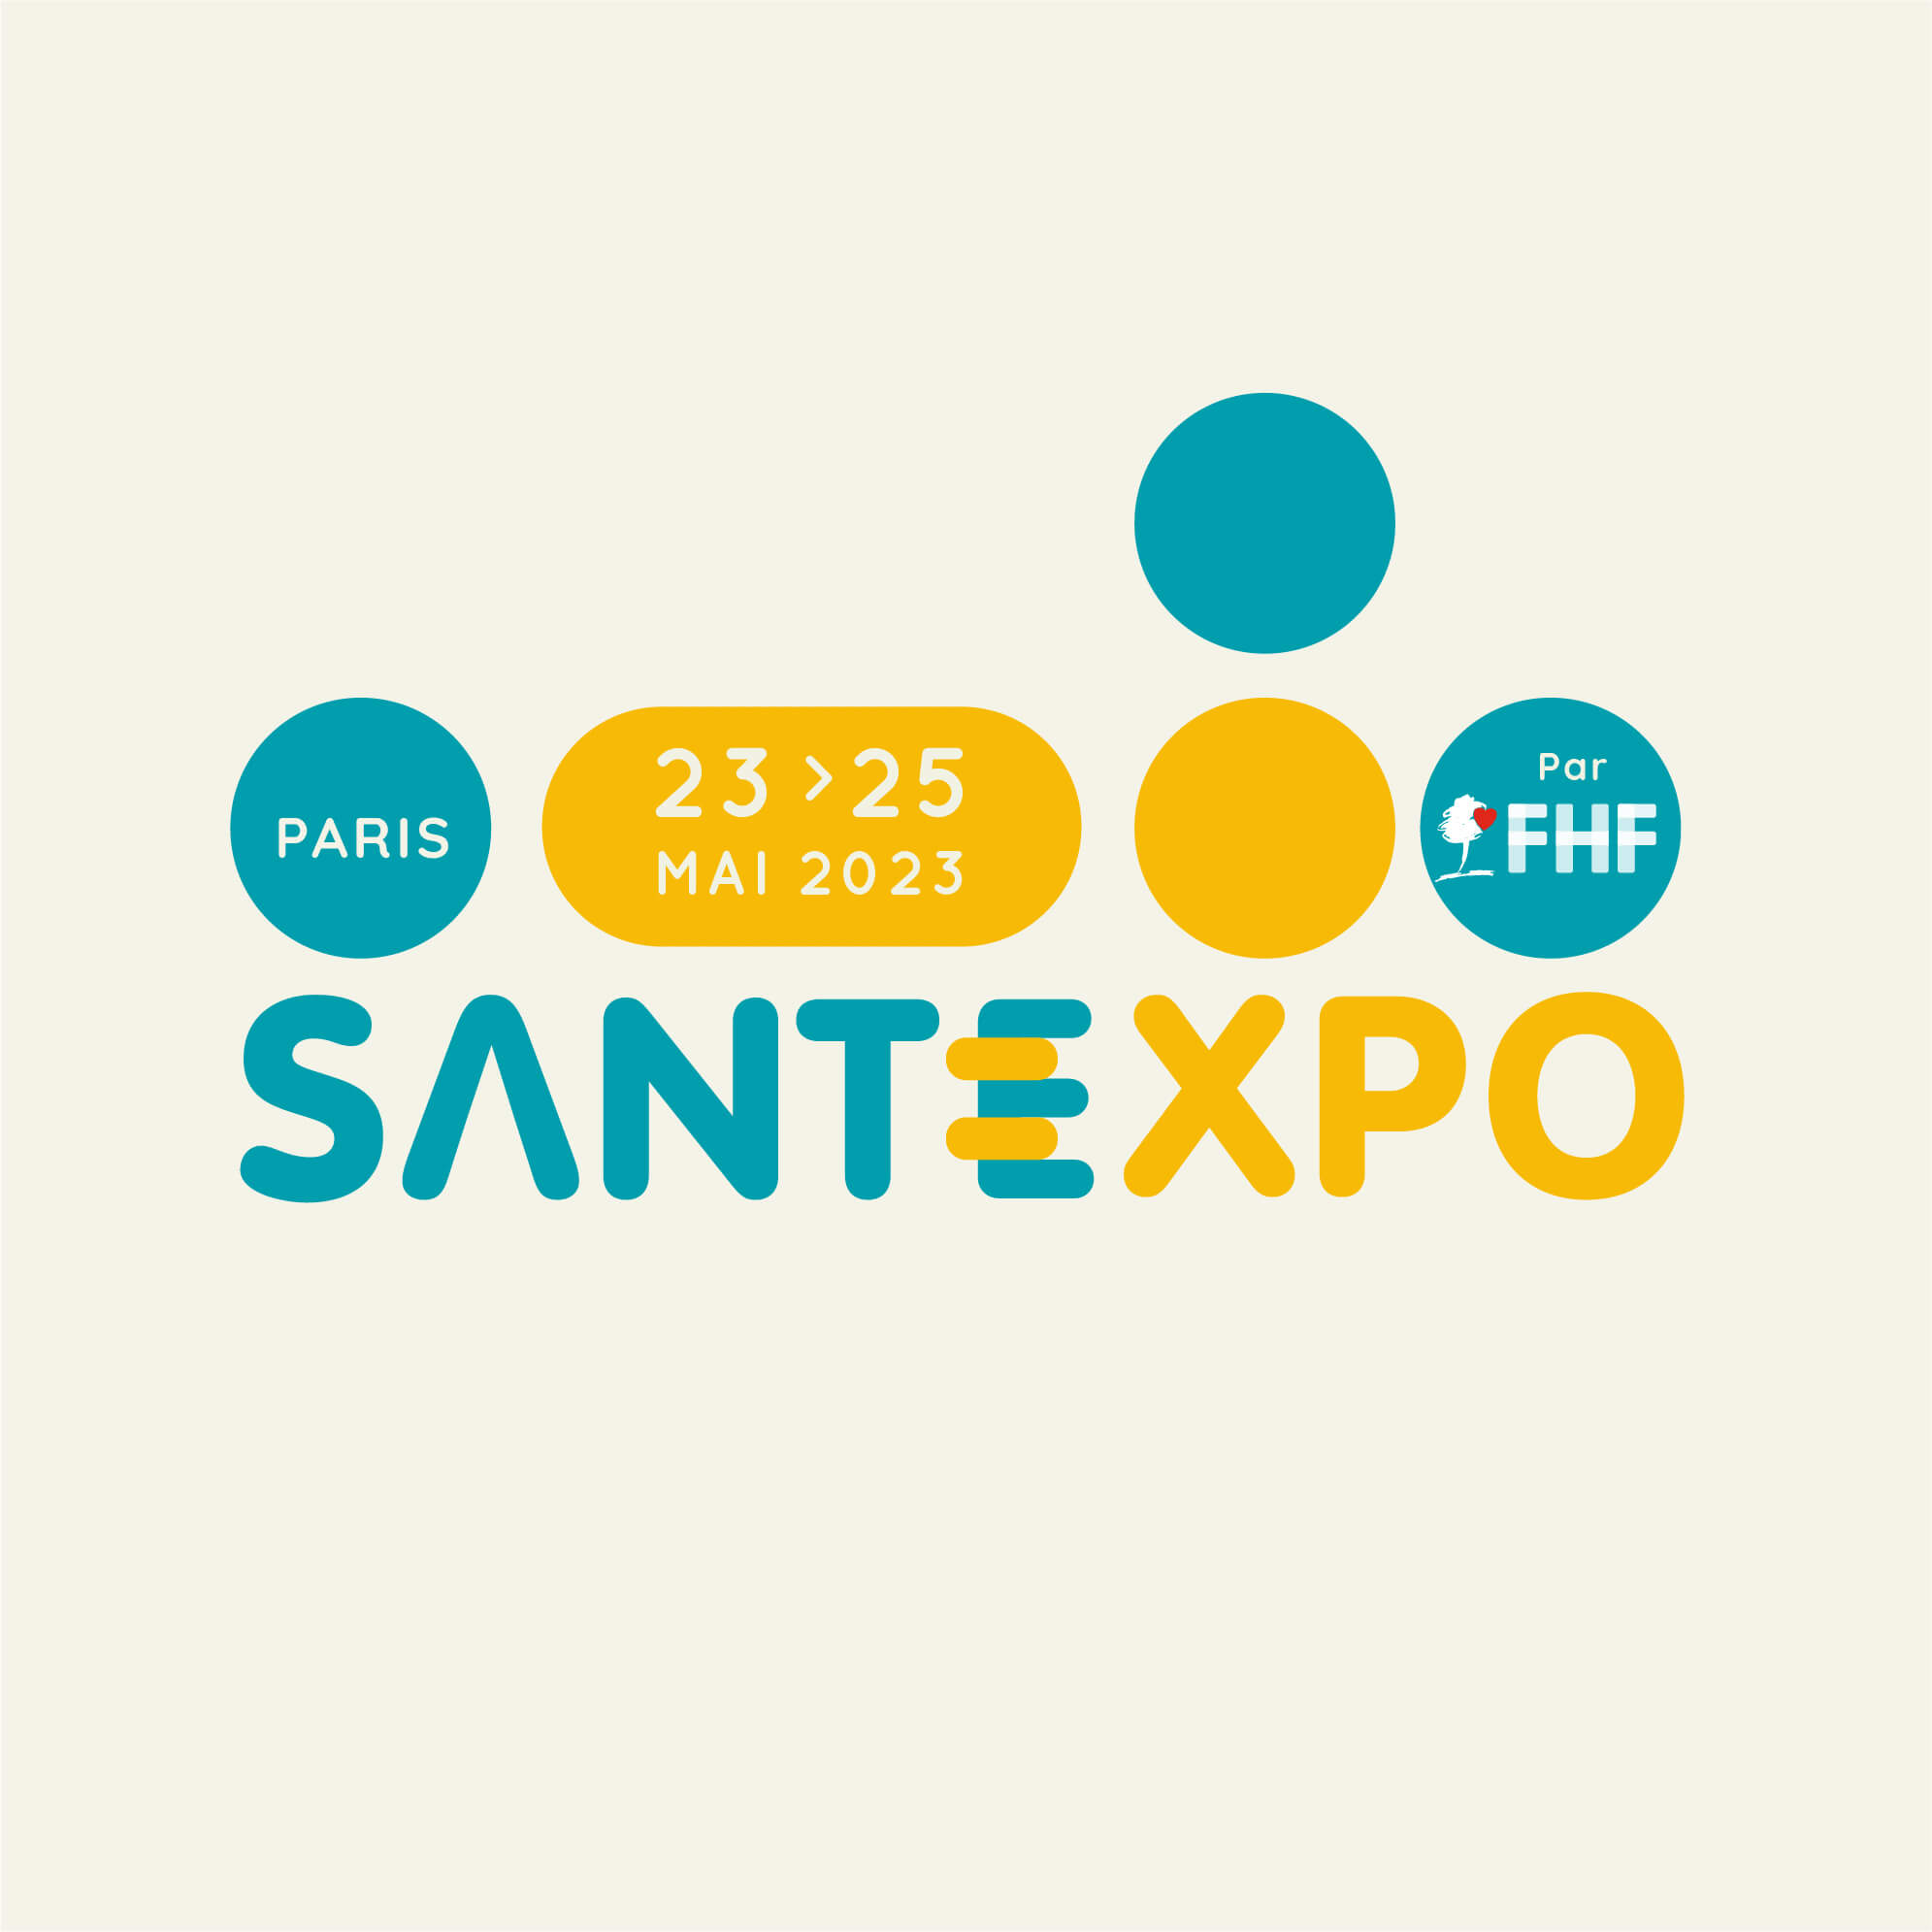 Come and visit us at SantExpo Paris !